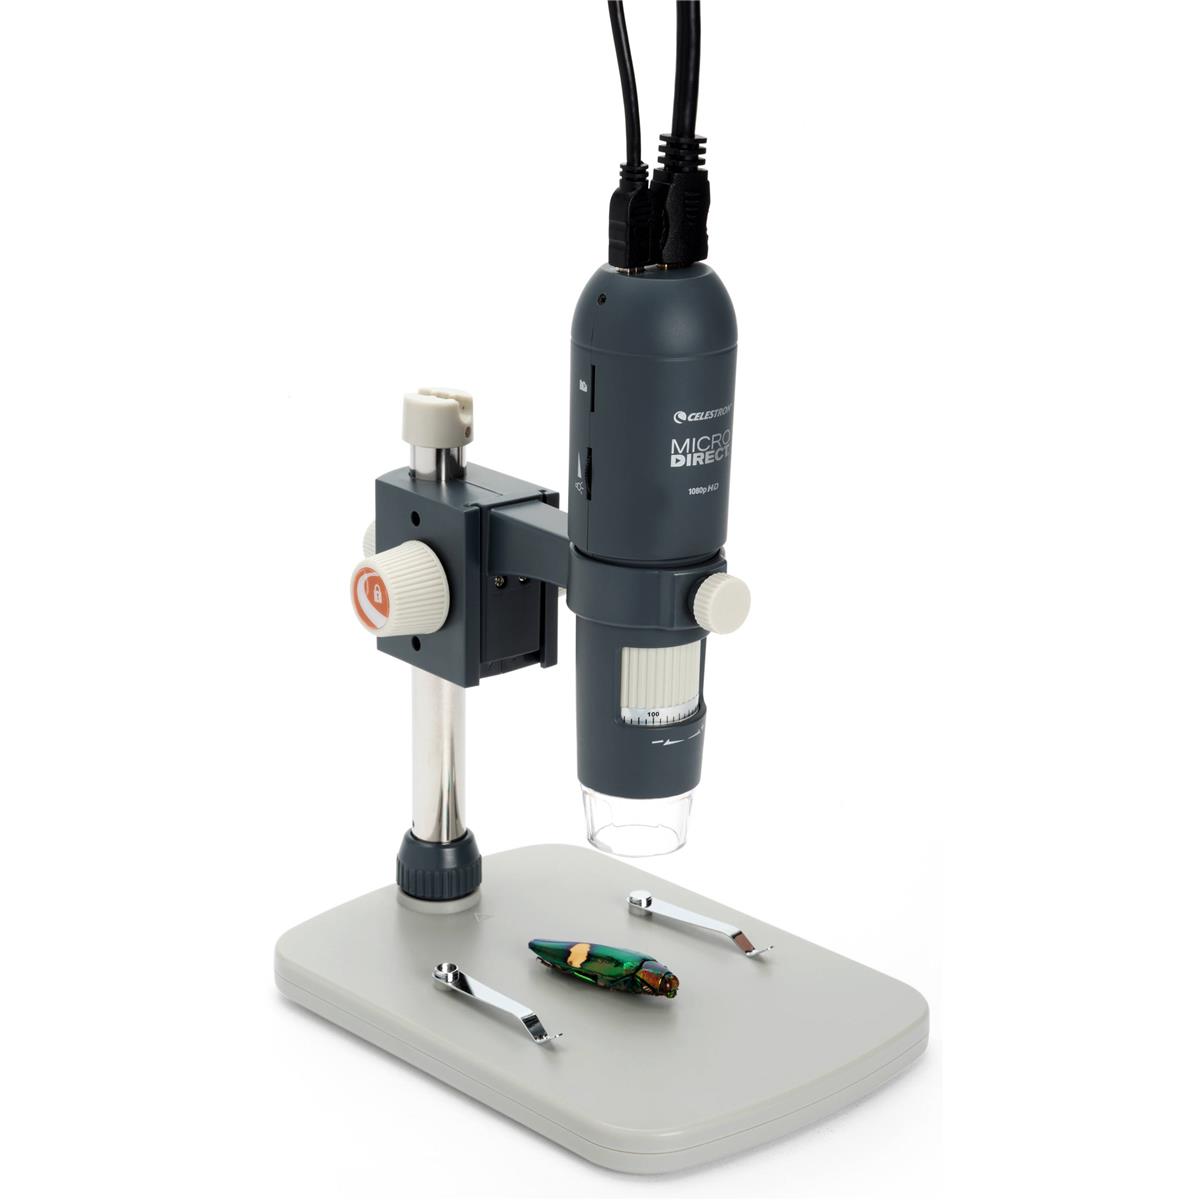 Image of Celestron MicroDirect 1080p HD Handheld Digital Microscope